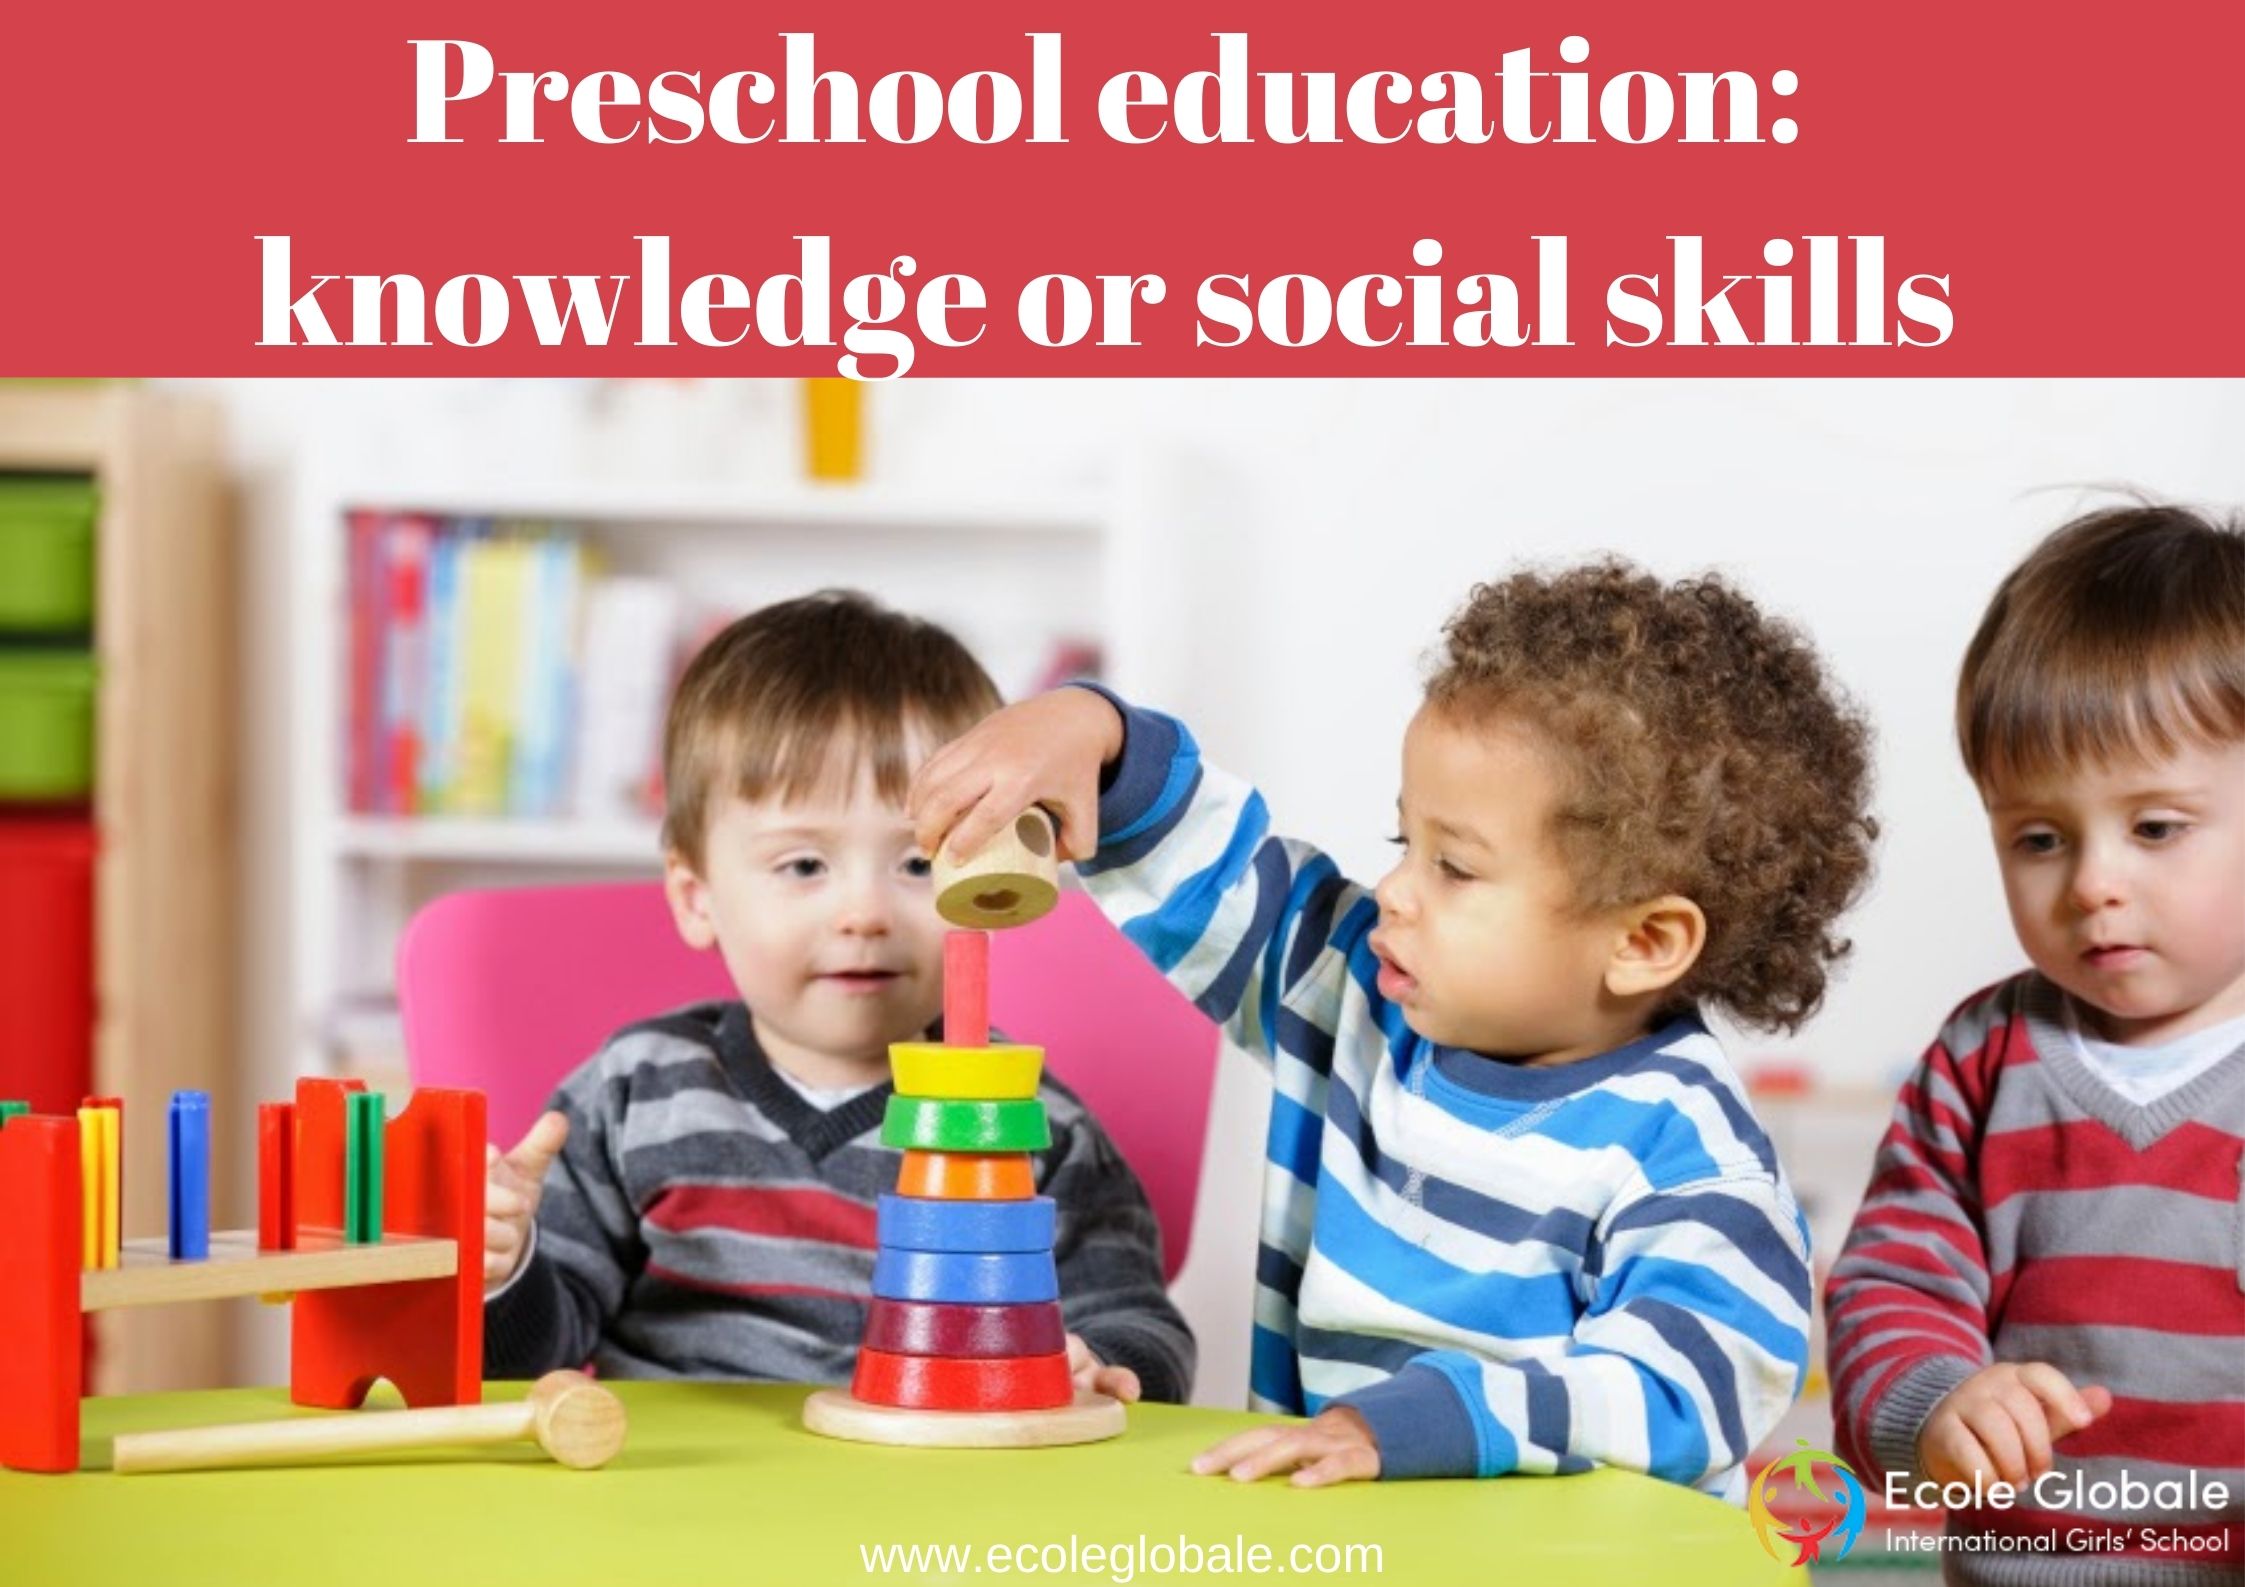 Preschool education: knowledge or social skills